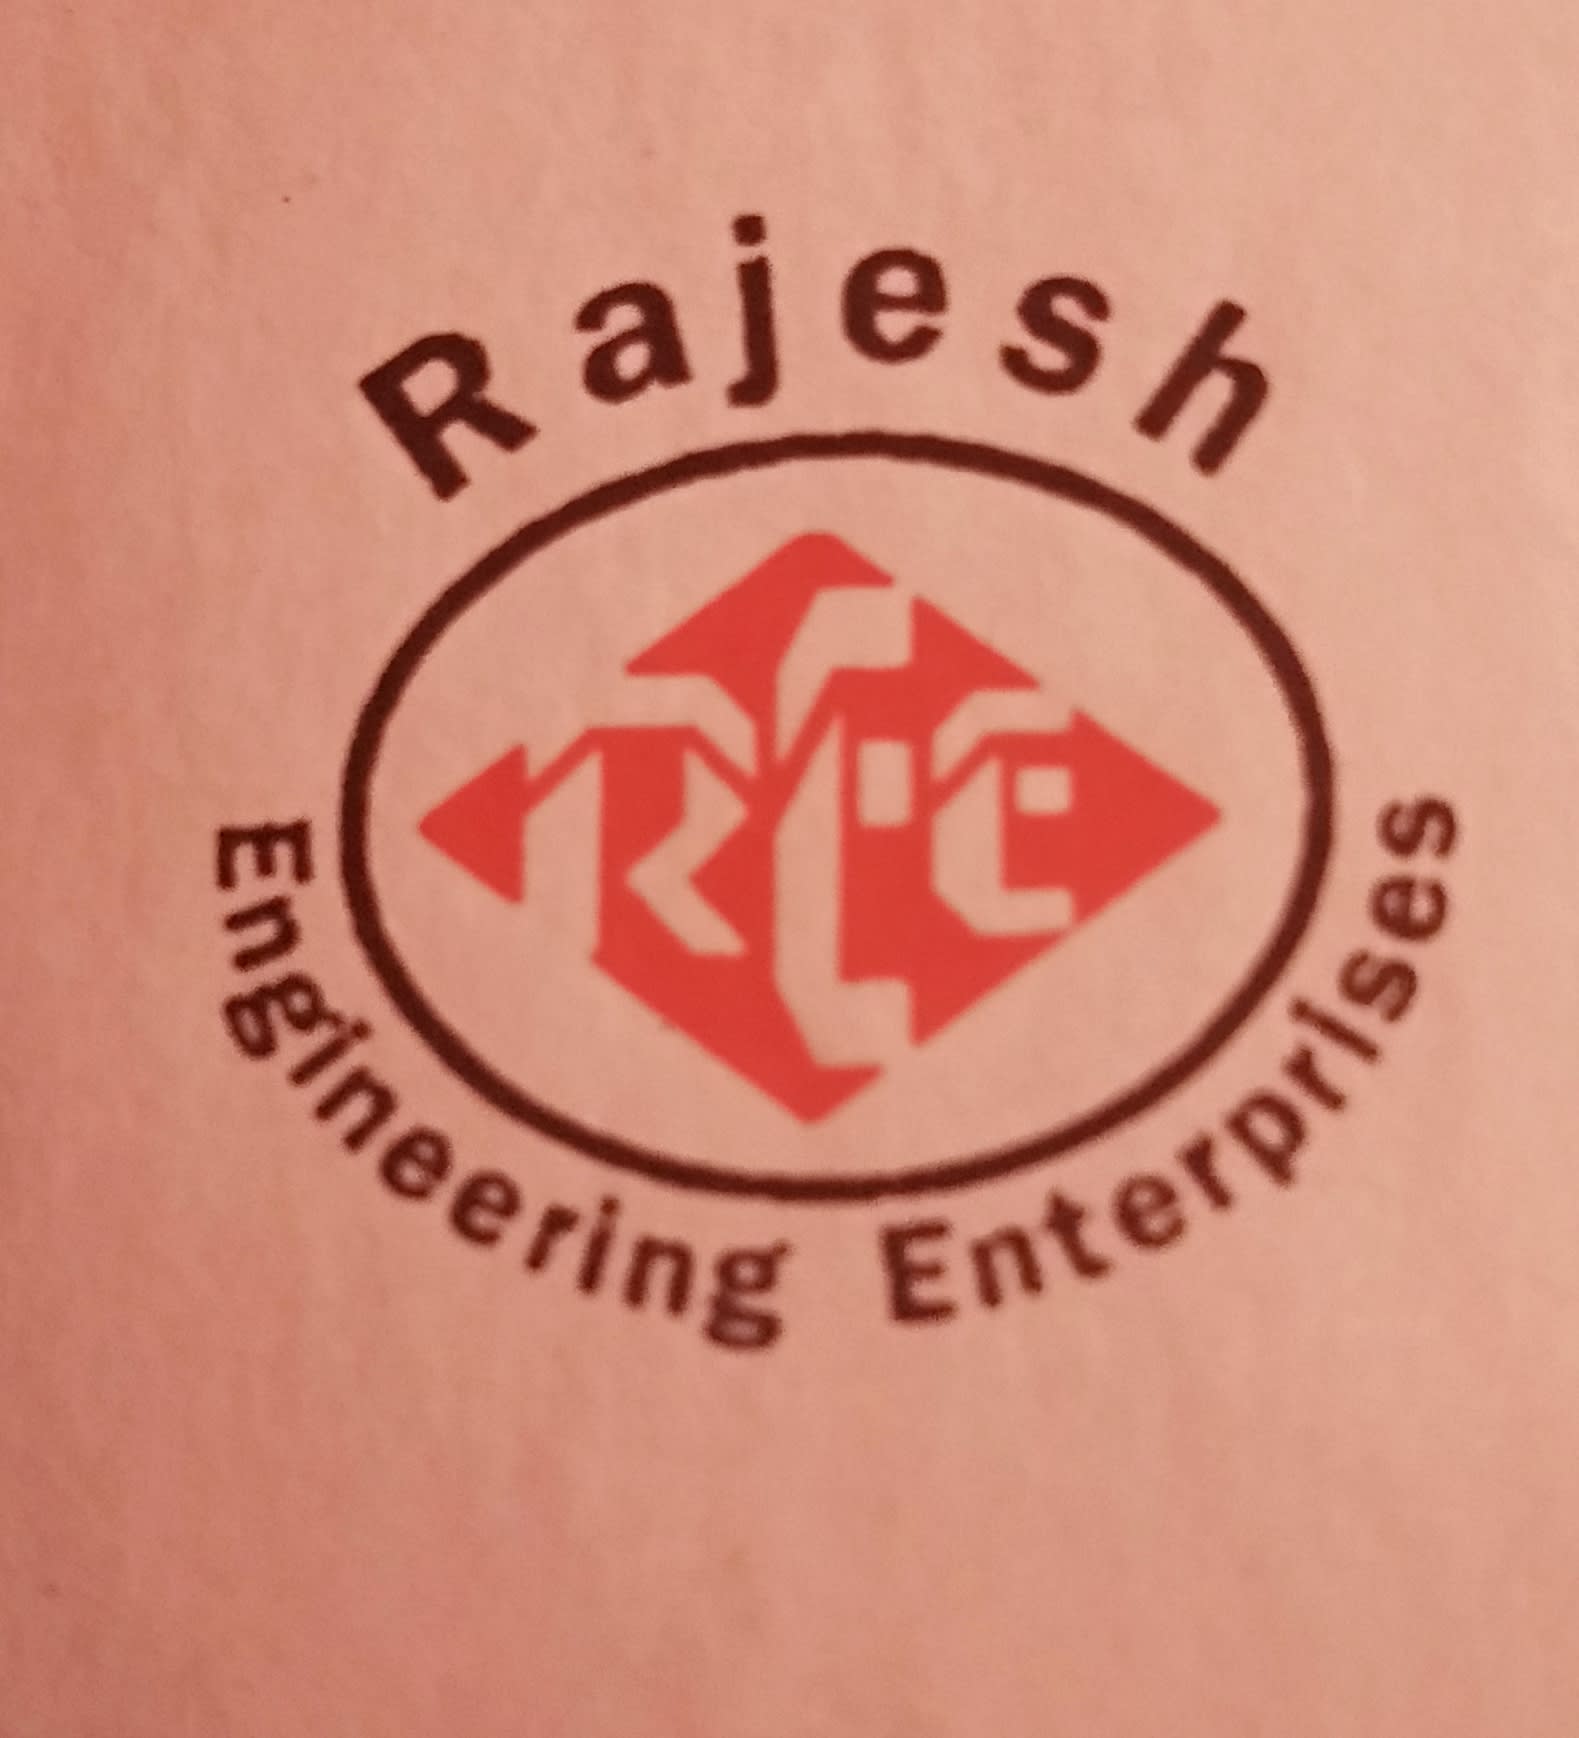 Rajesh Engineering Enterprises